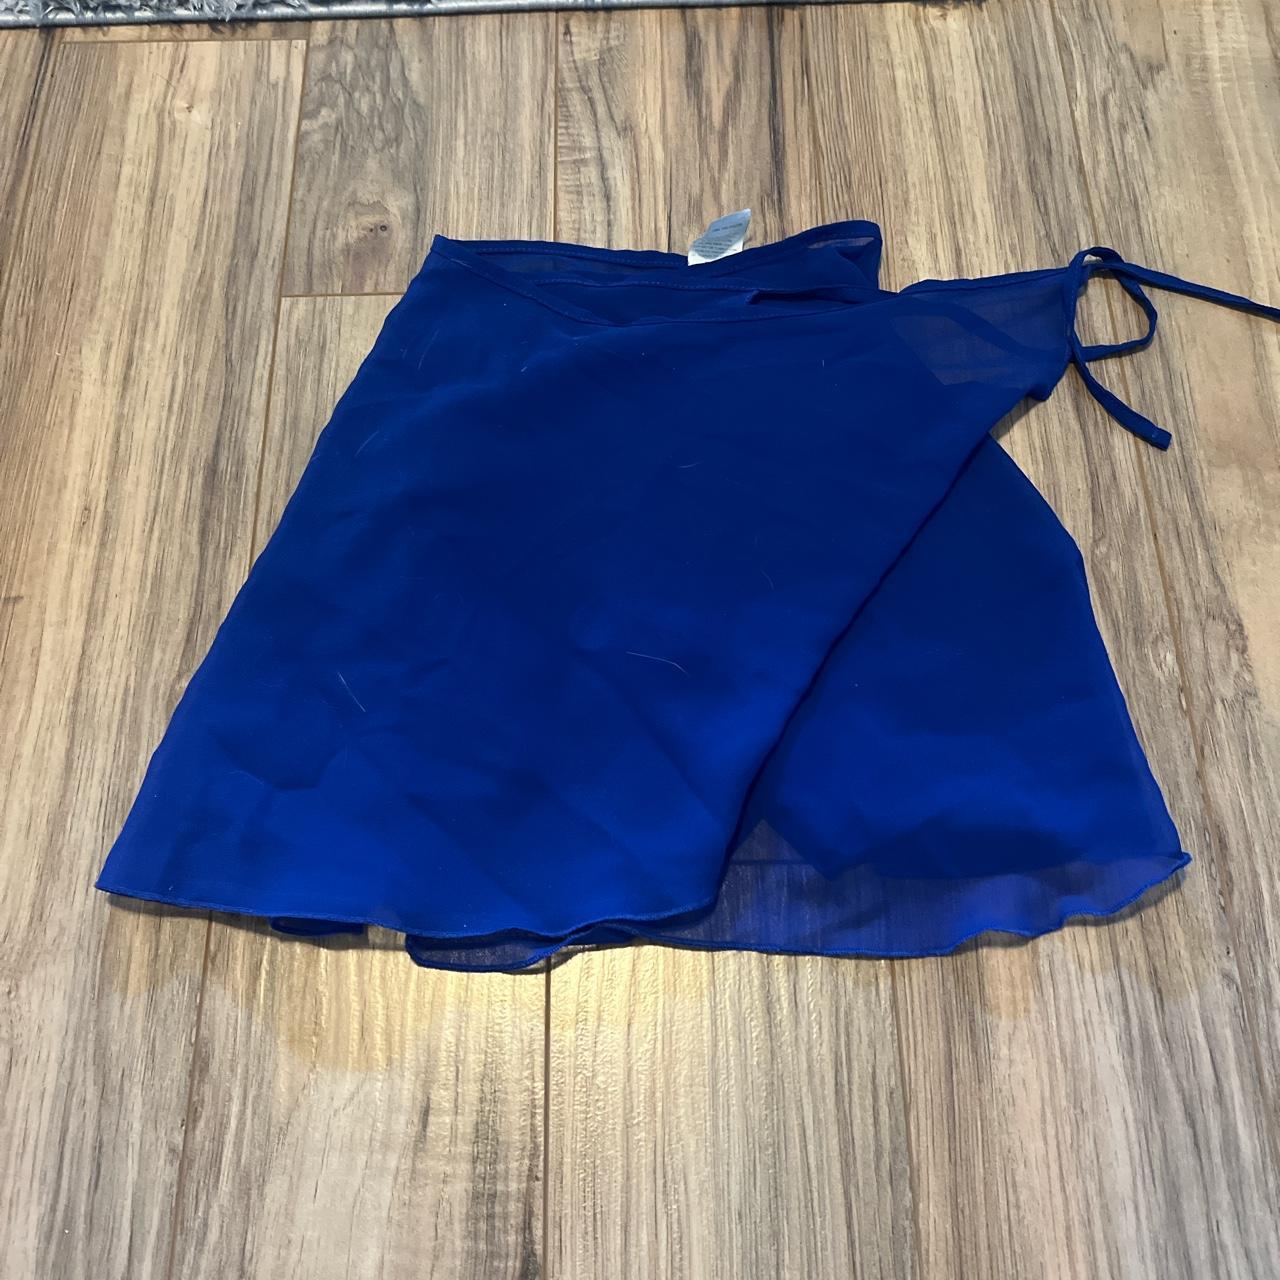 Capezio Women's Skirt